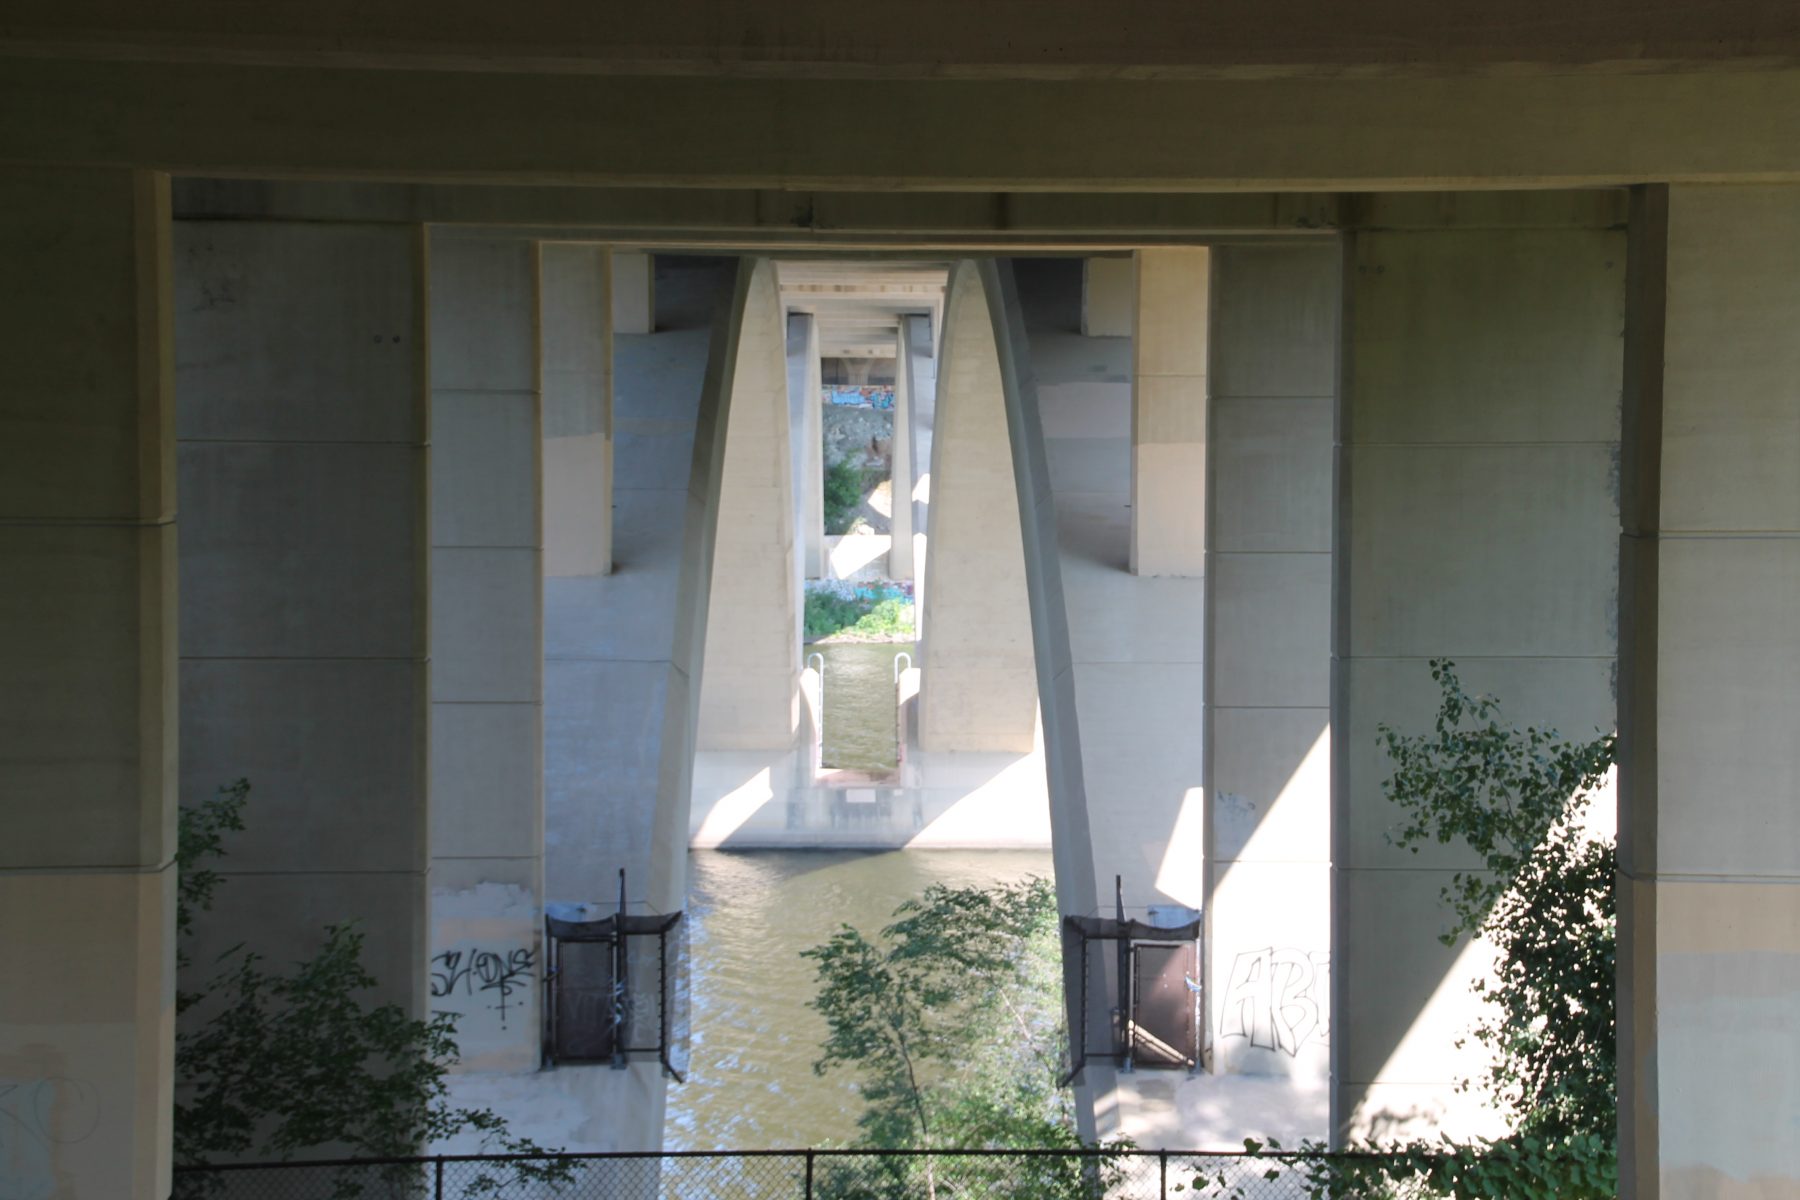 Support structures beneath Lake Street Bridge